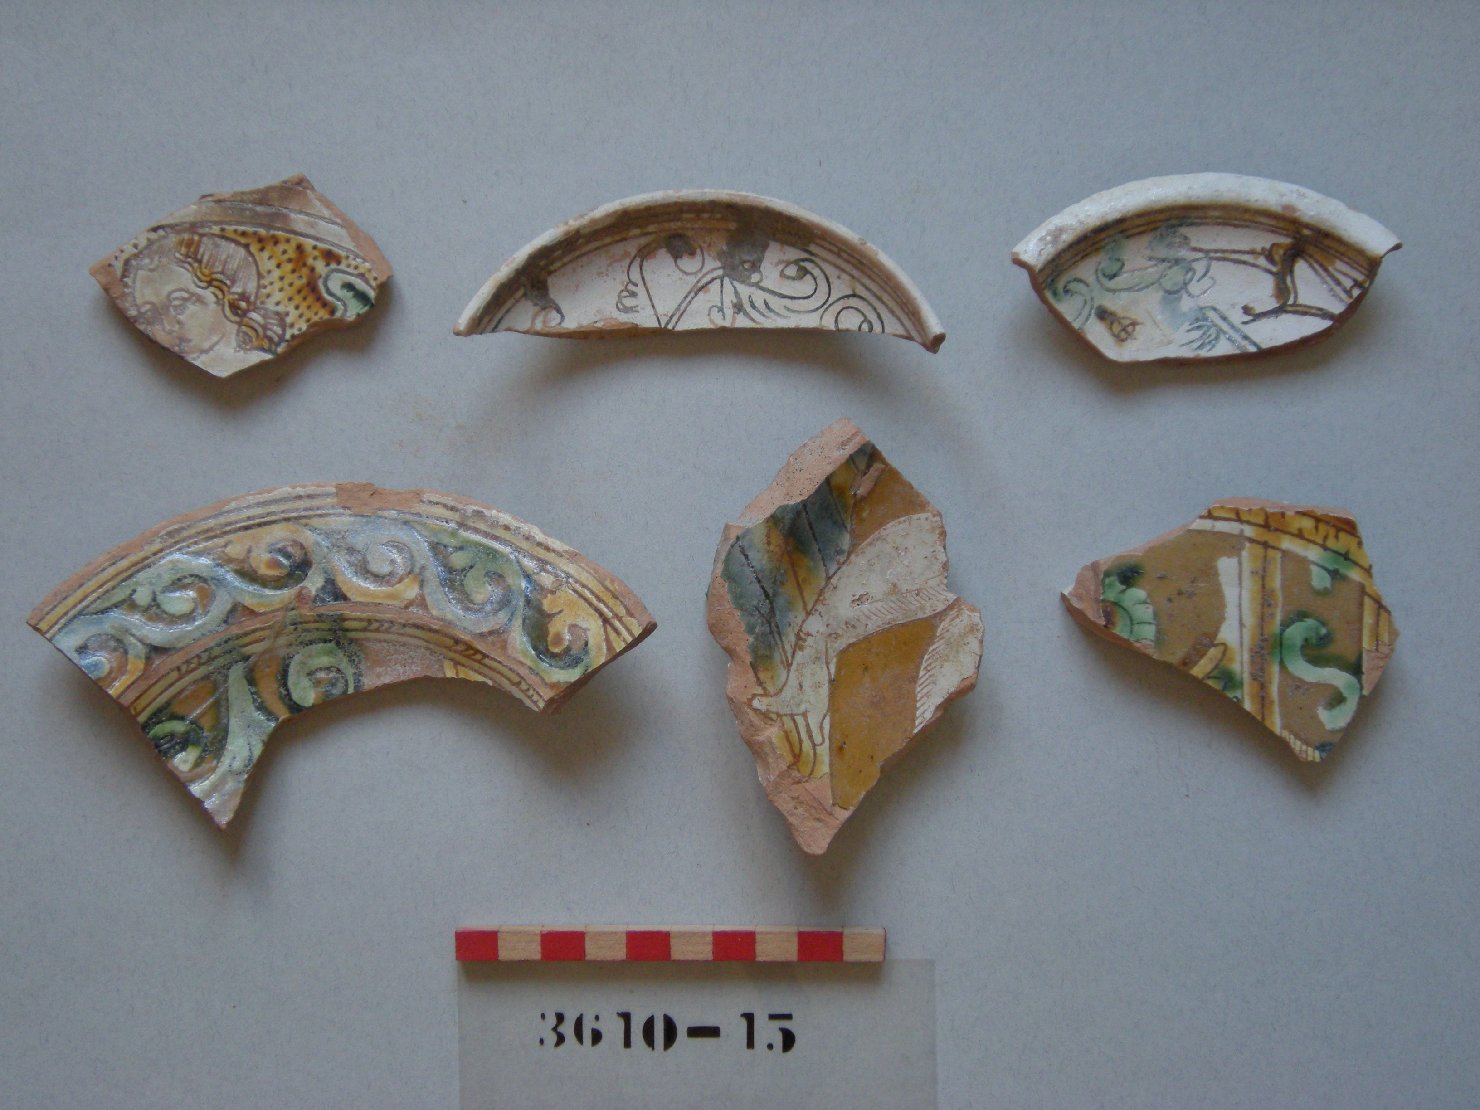 motivi decorativi vegetali (piatto, frammento) - ambito veneziano (secc. XVI/ XVII)